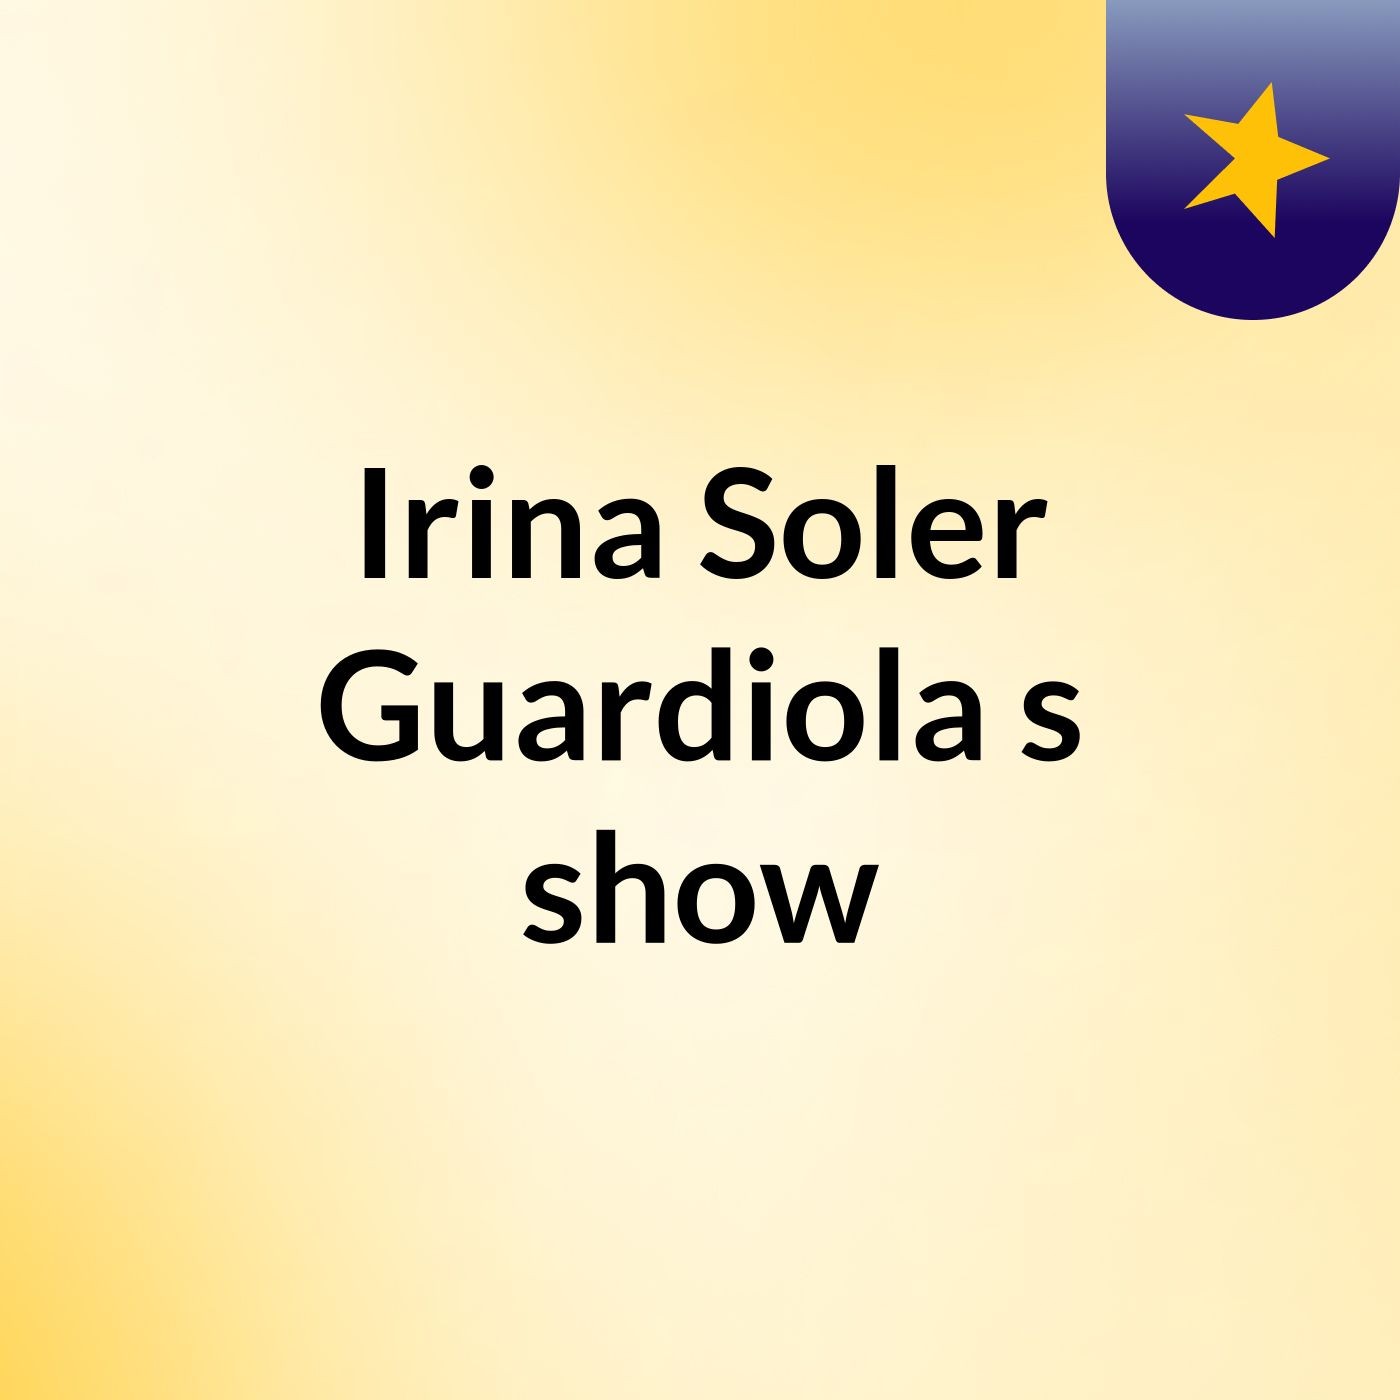 Irina Soler Guardiola's show